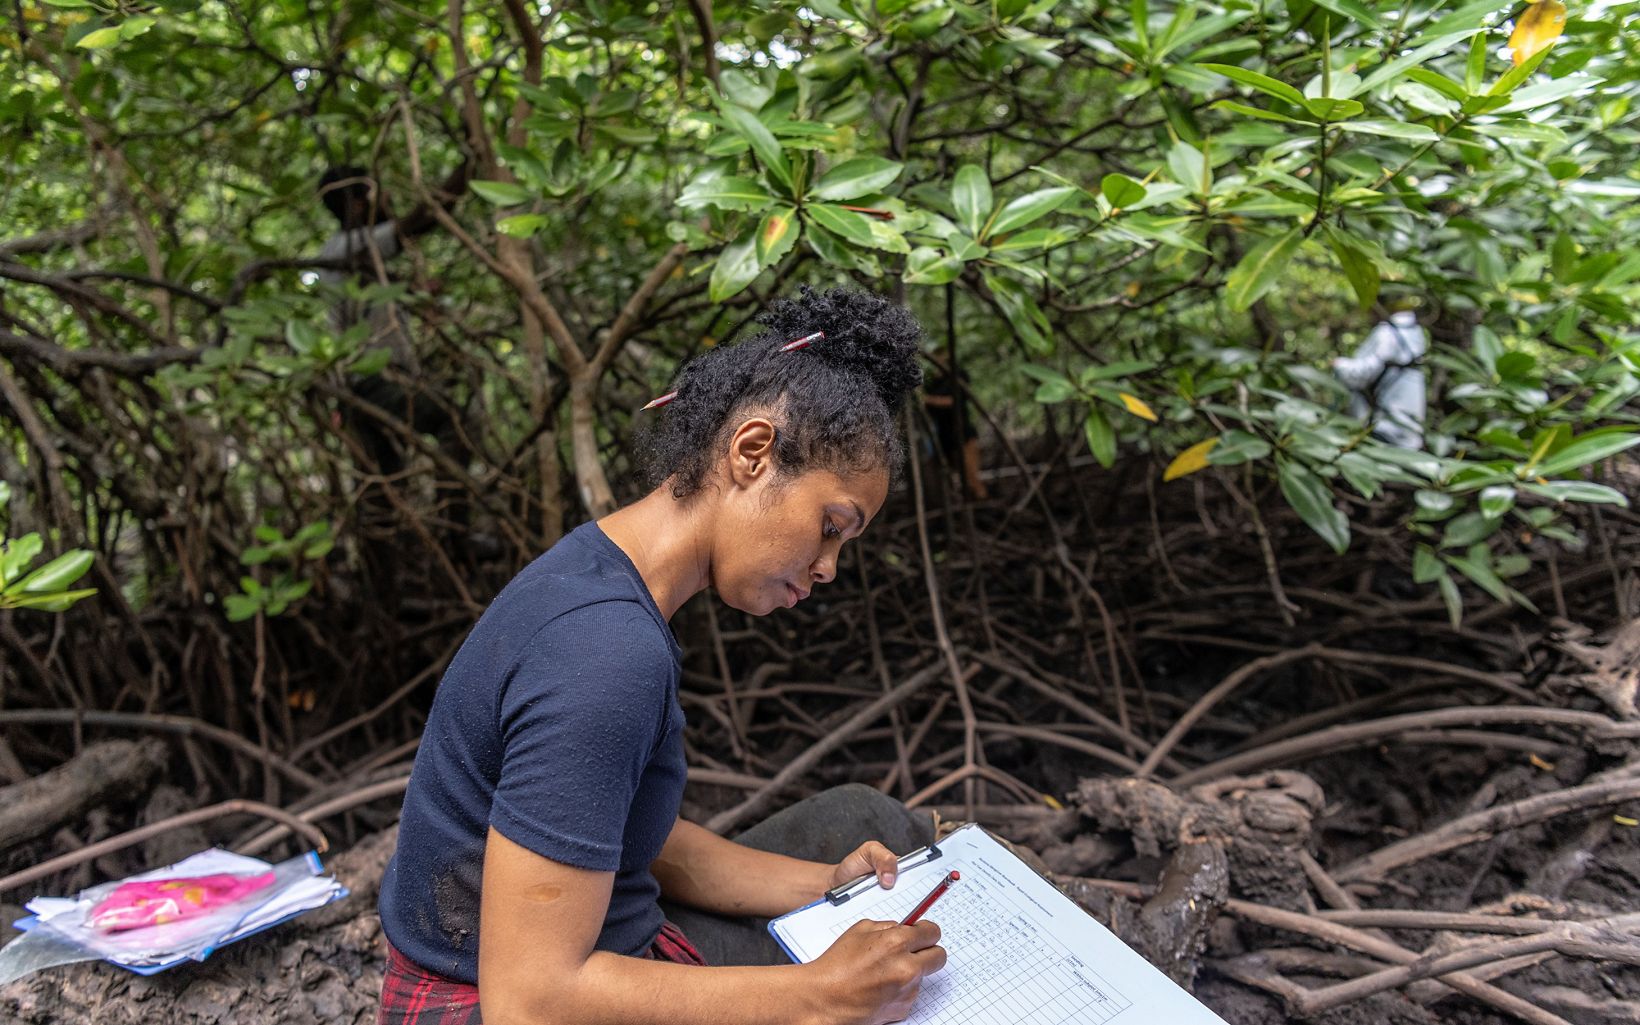 Mangrove research Alice Oembari, a participant in Mangoro Market Meri, doing field work within the mangrove forests near a future boardwalk site near Port Moresby, Papua New Guinea. © Annette Ruzicka